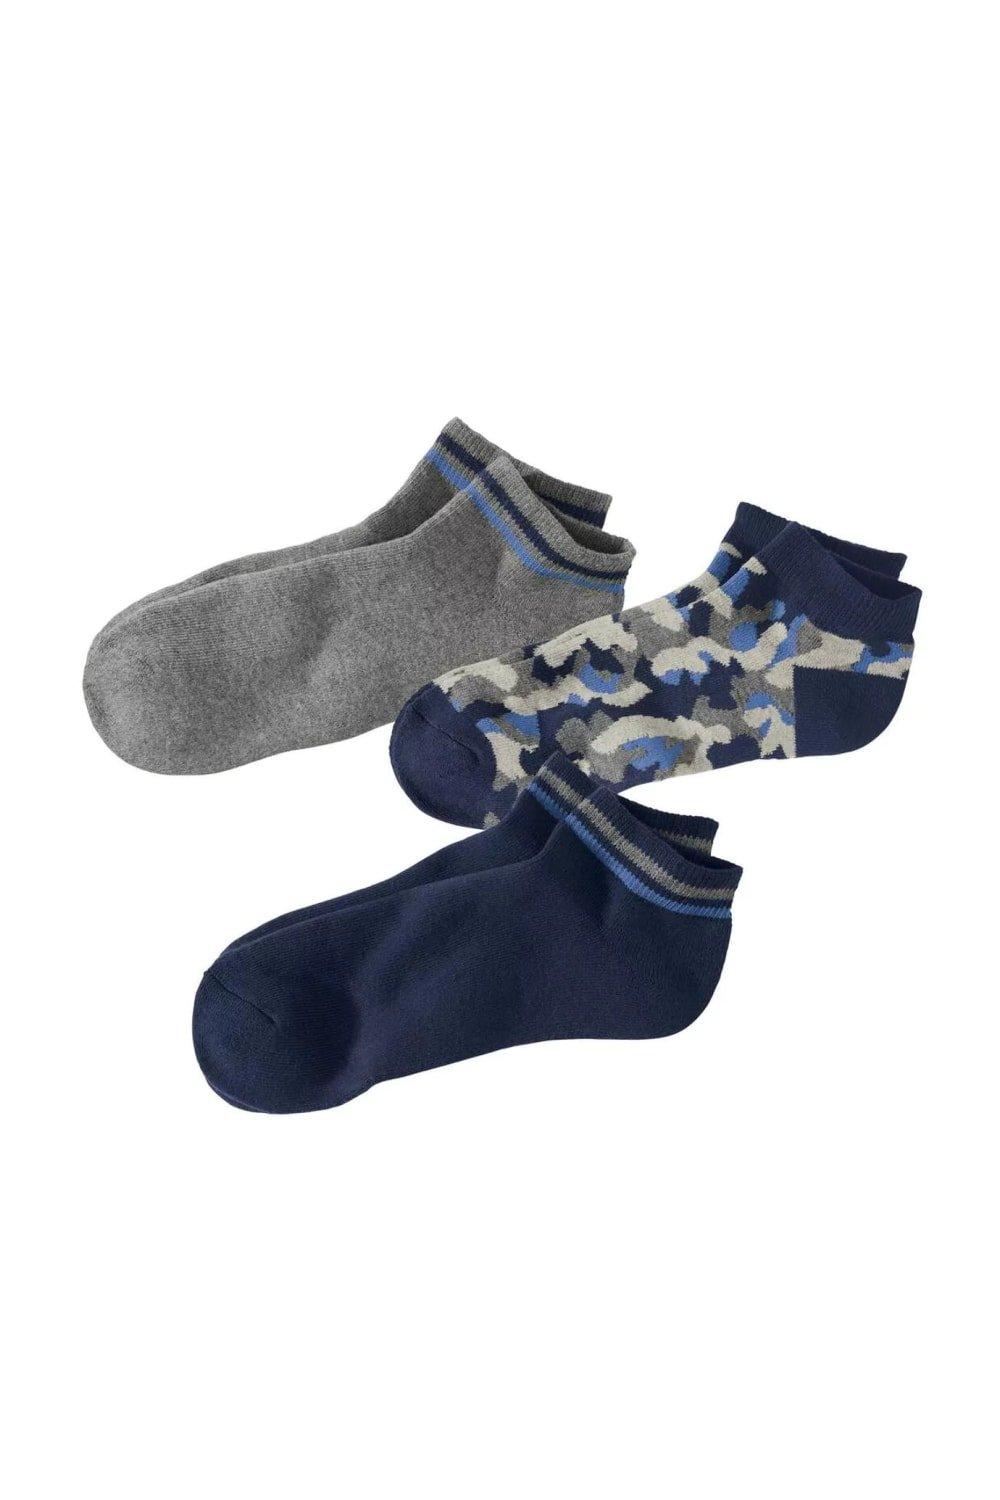 Camo Trainer Socks (Pack of 3)